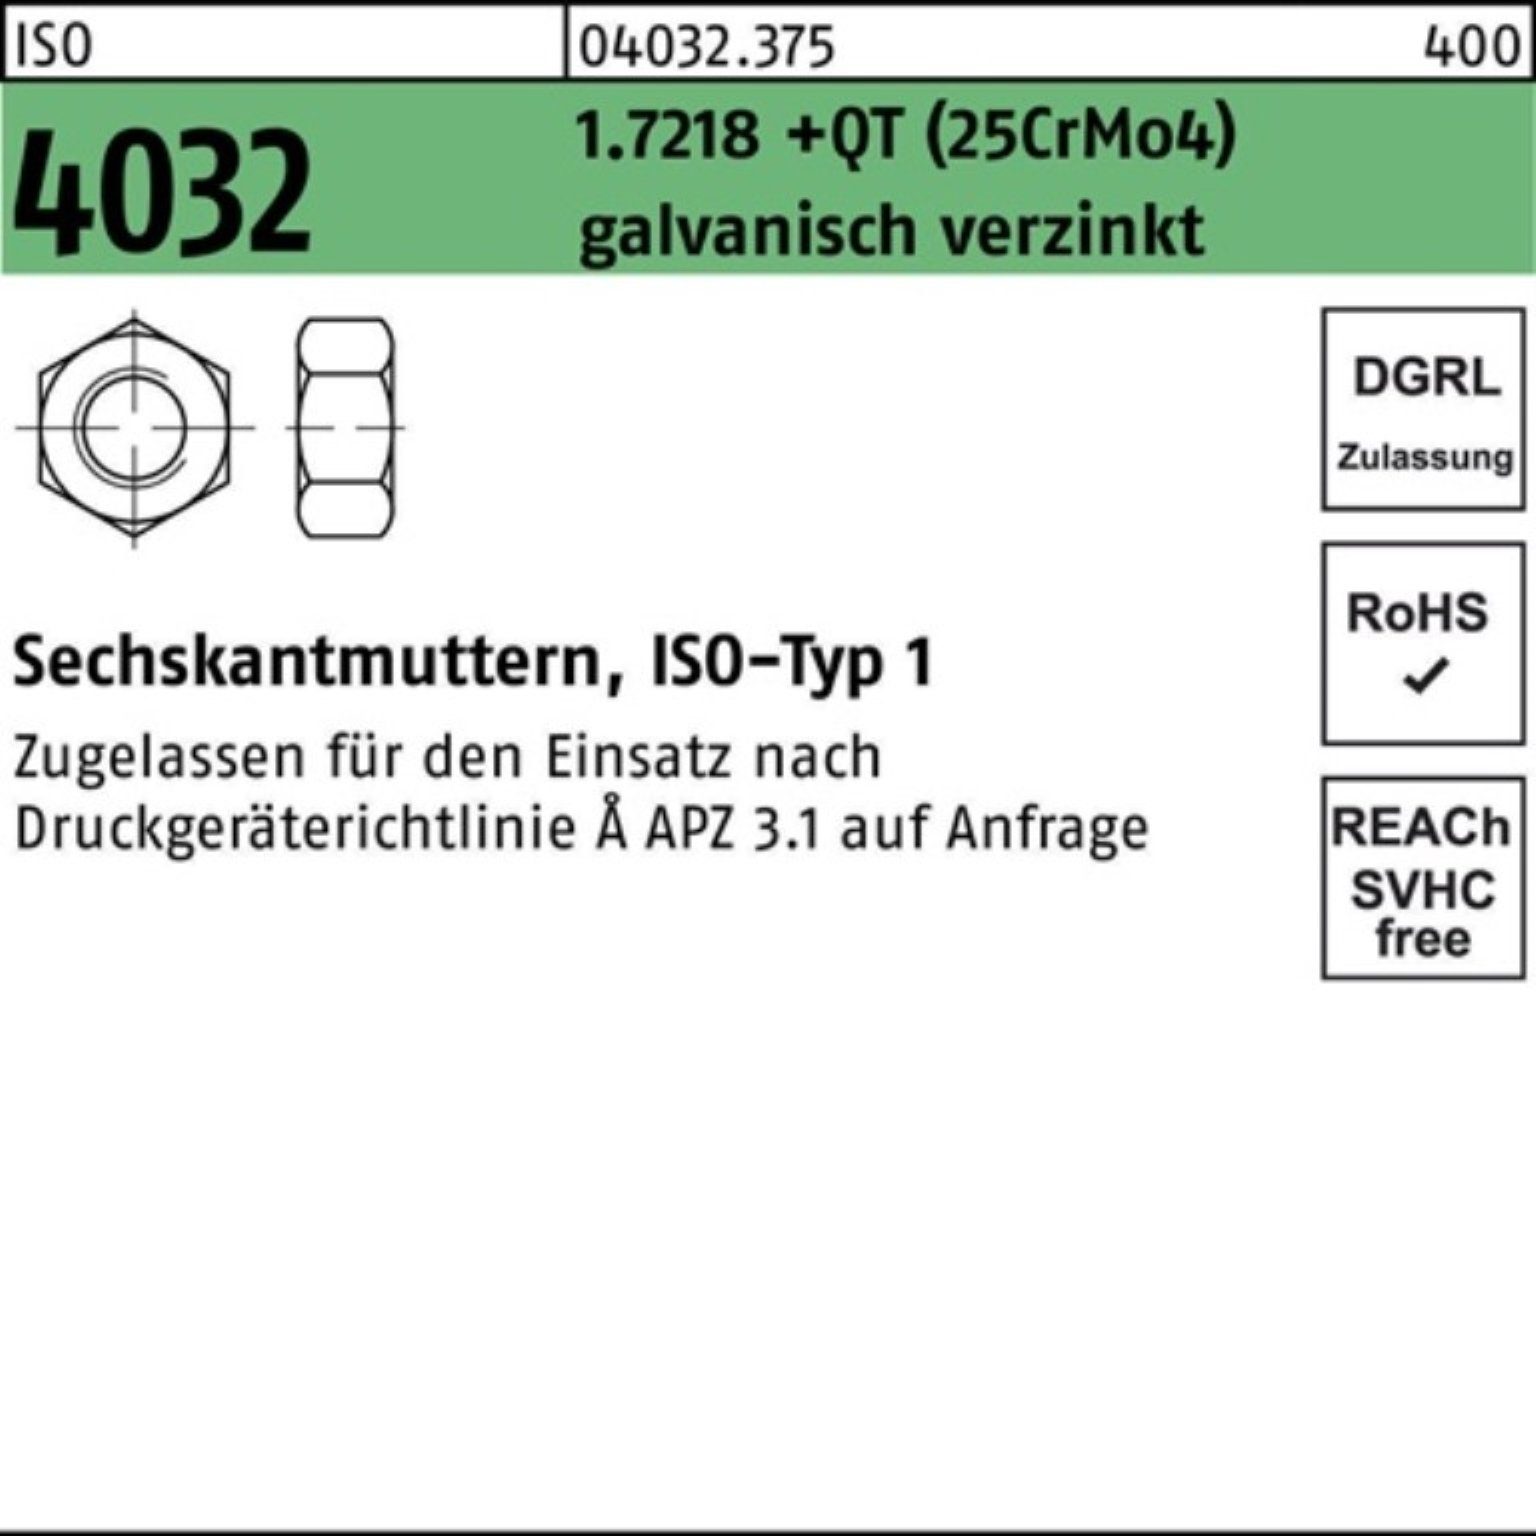 (25CrMo4) Bufab 4032 +QT galv.verz M36 Pack Sechskantmutter 100er 1.7218 Muttern ISO